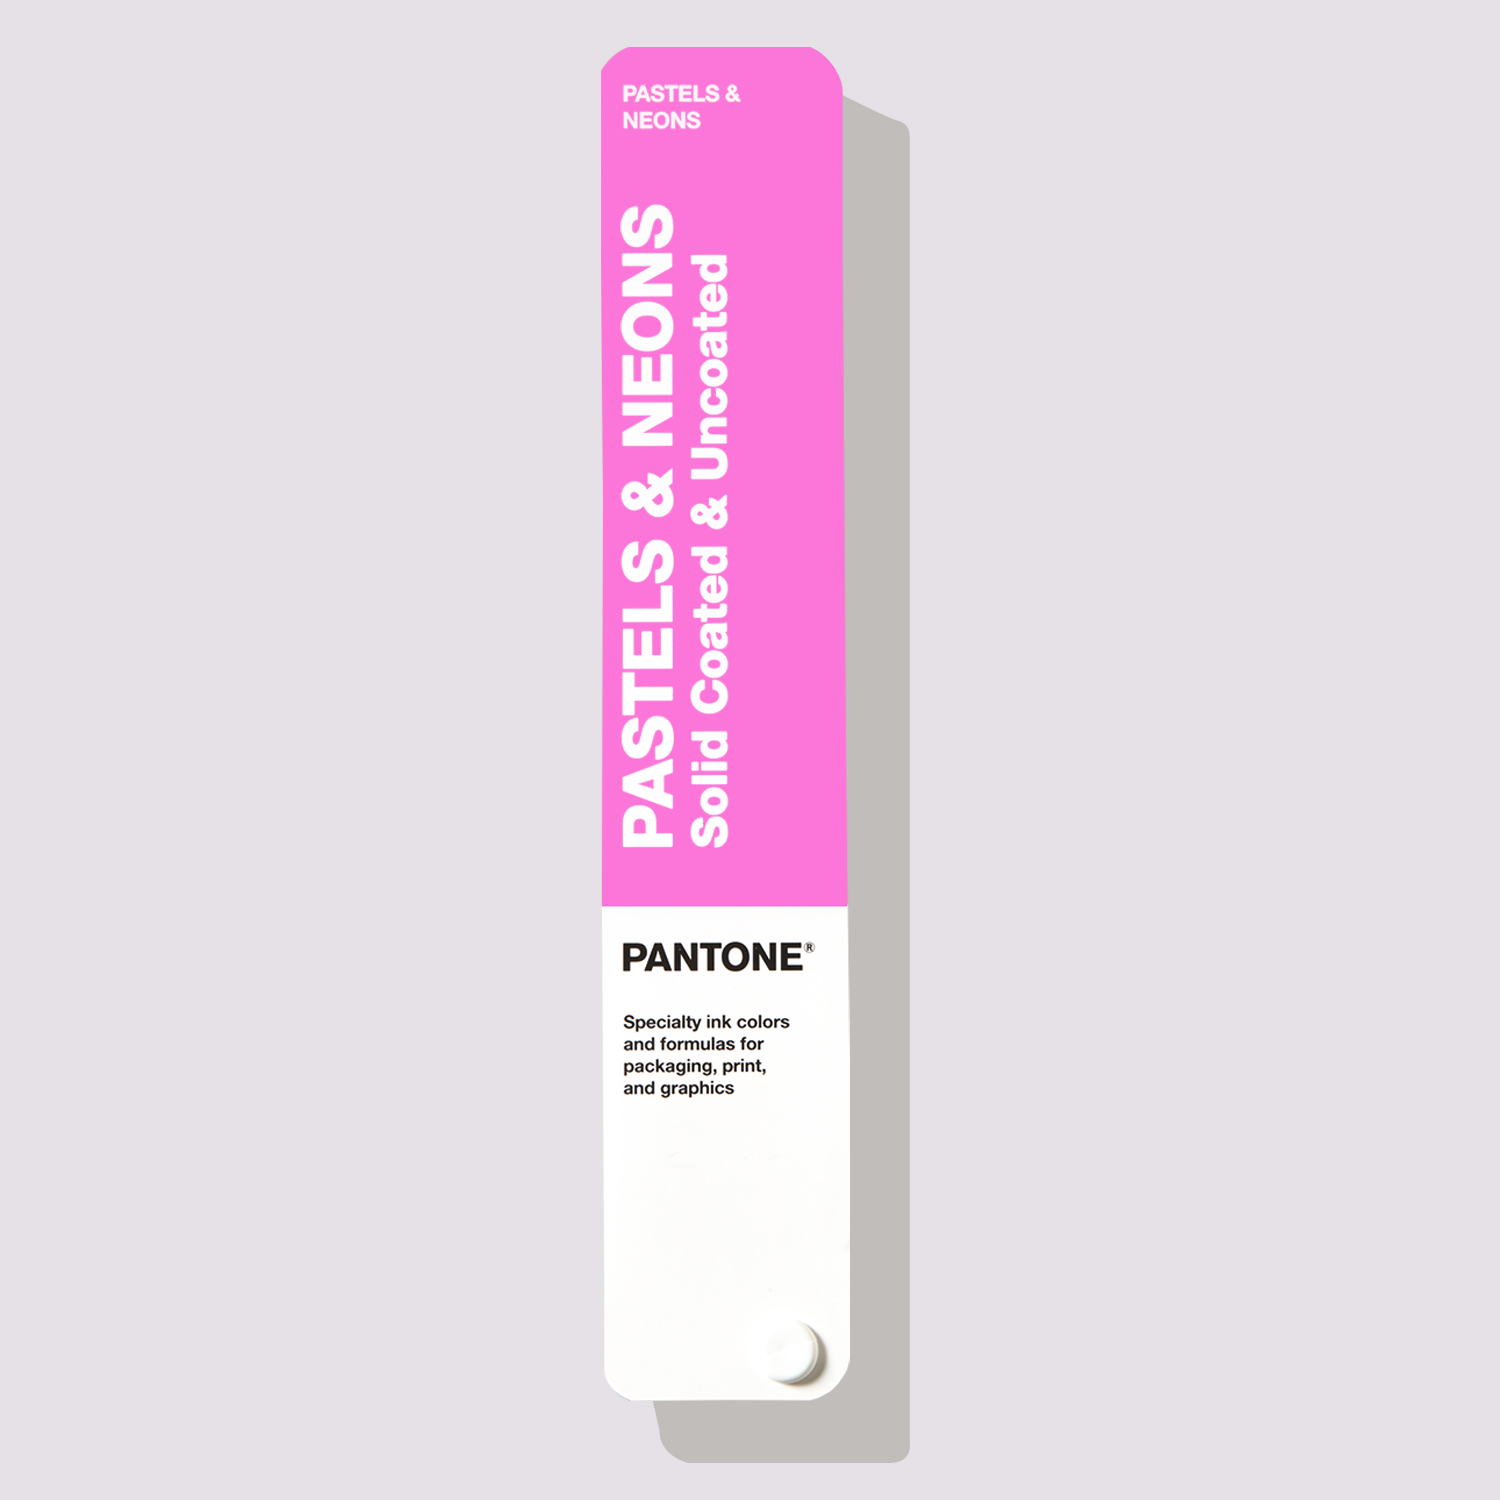 Pantone Pastels & Neons Guide New - VeriVide